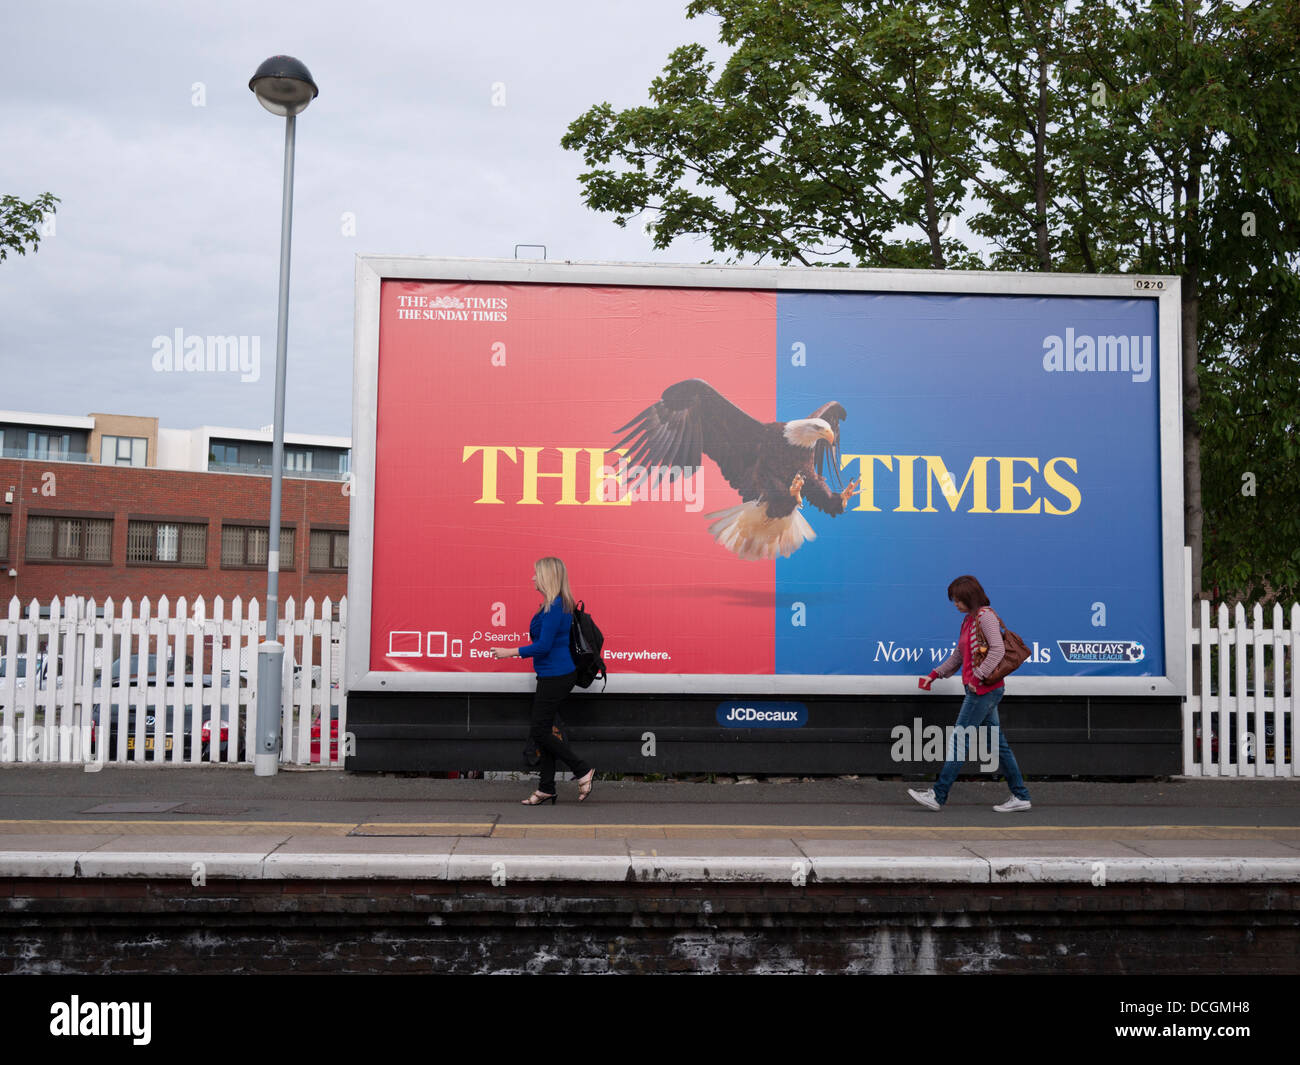 uk-quality-newspaper-the-times-newspaper-advert-on-billboard-hoarding-DCGMH8.jpg